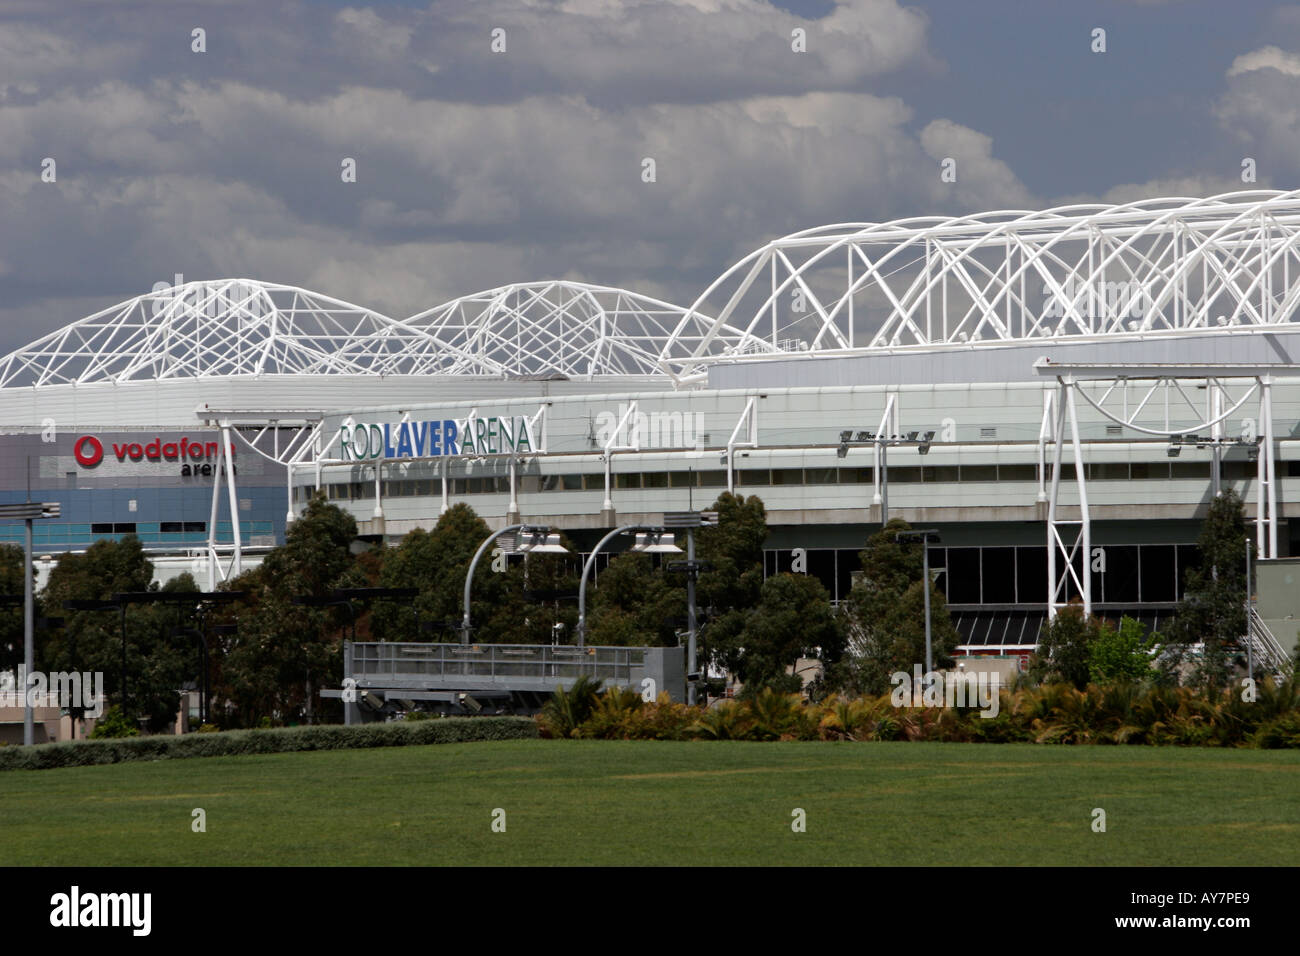 Vodafone Arena Rod Laver Arena Sports And Entertainment Centres Melbourne Victoria Australia Stock Photo Alamy